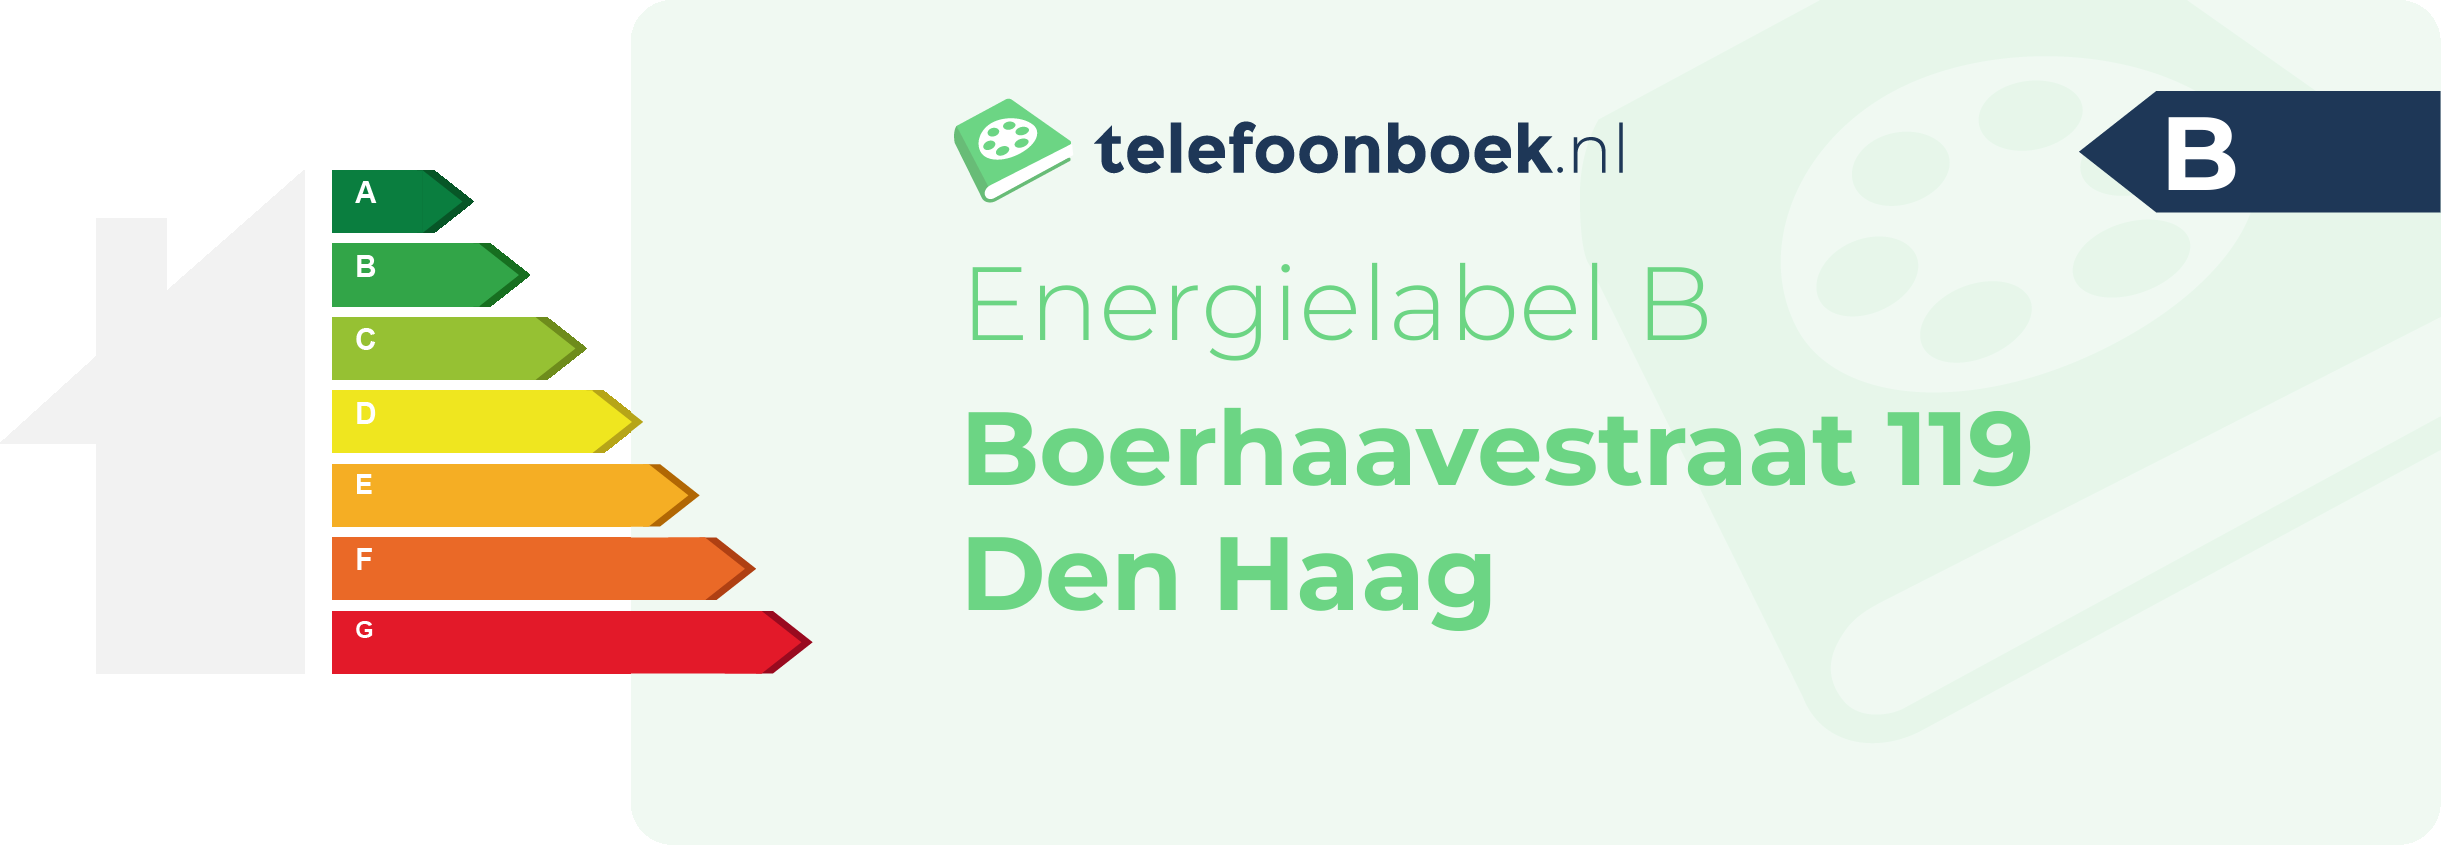 Energielabel Boerhaavestraat 119 Den Haag